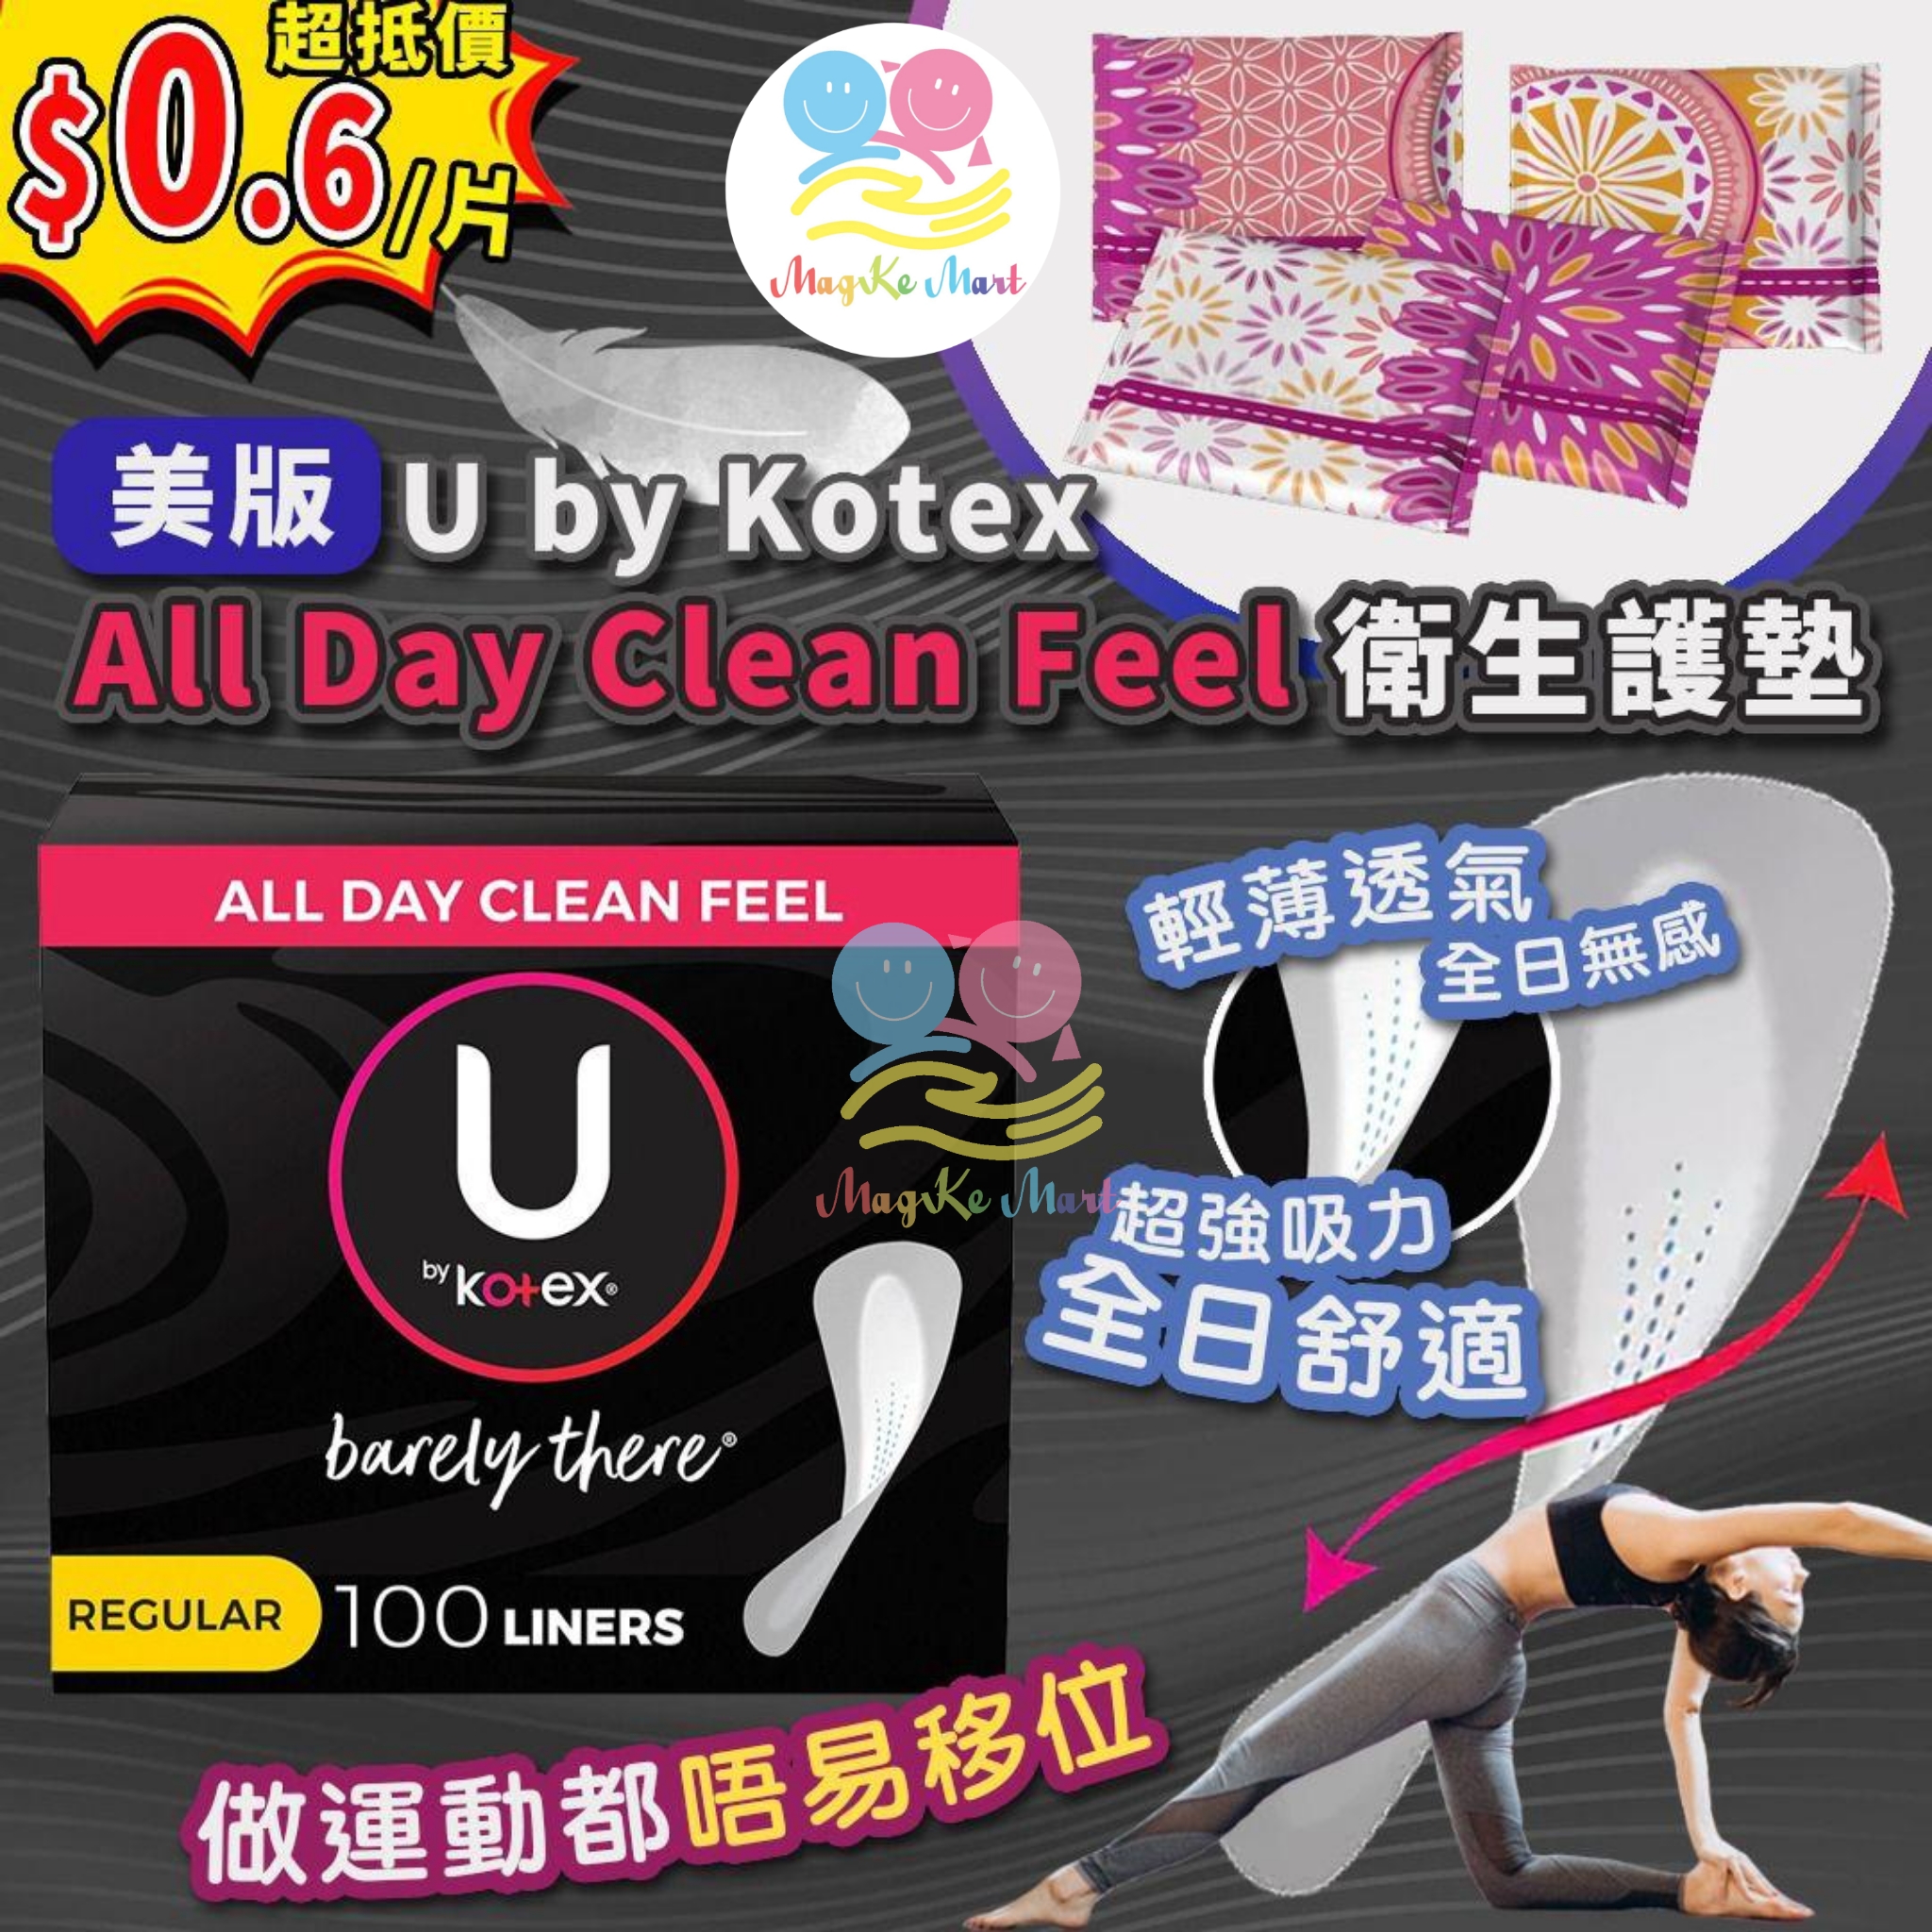 美版 U by Kotex All Day Clean Feel 衛生護墊 (1盒100片)